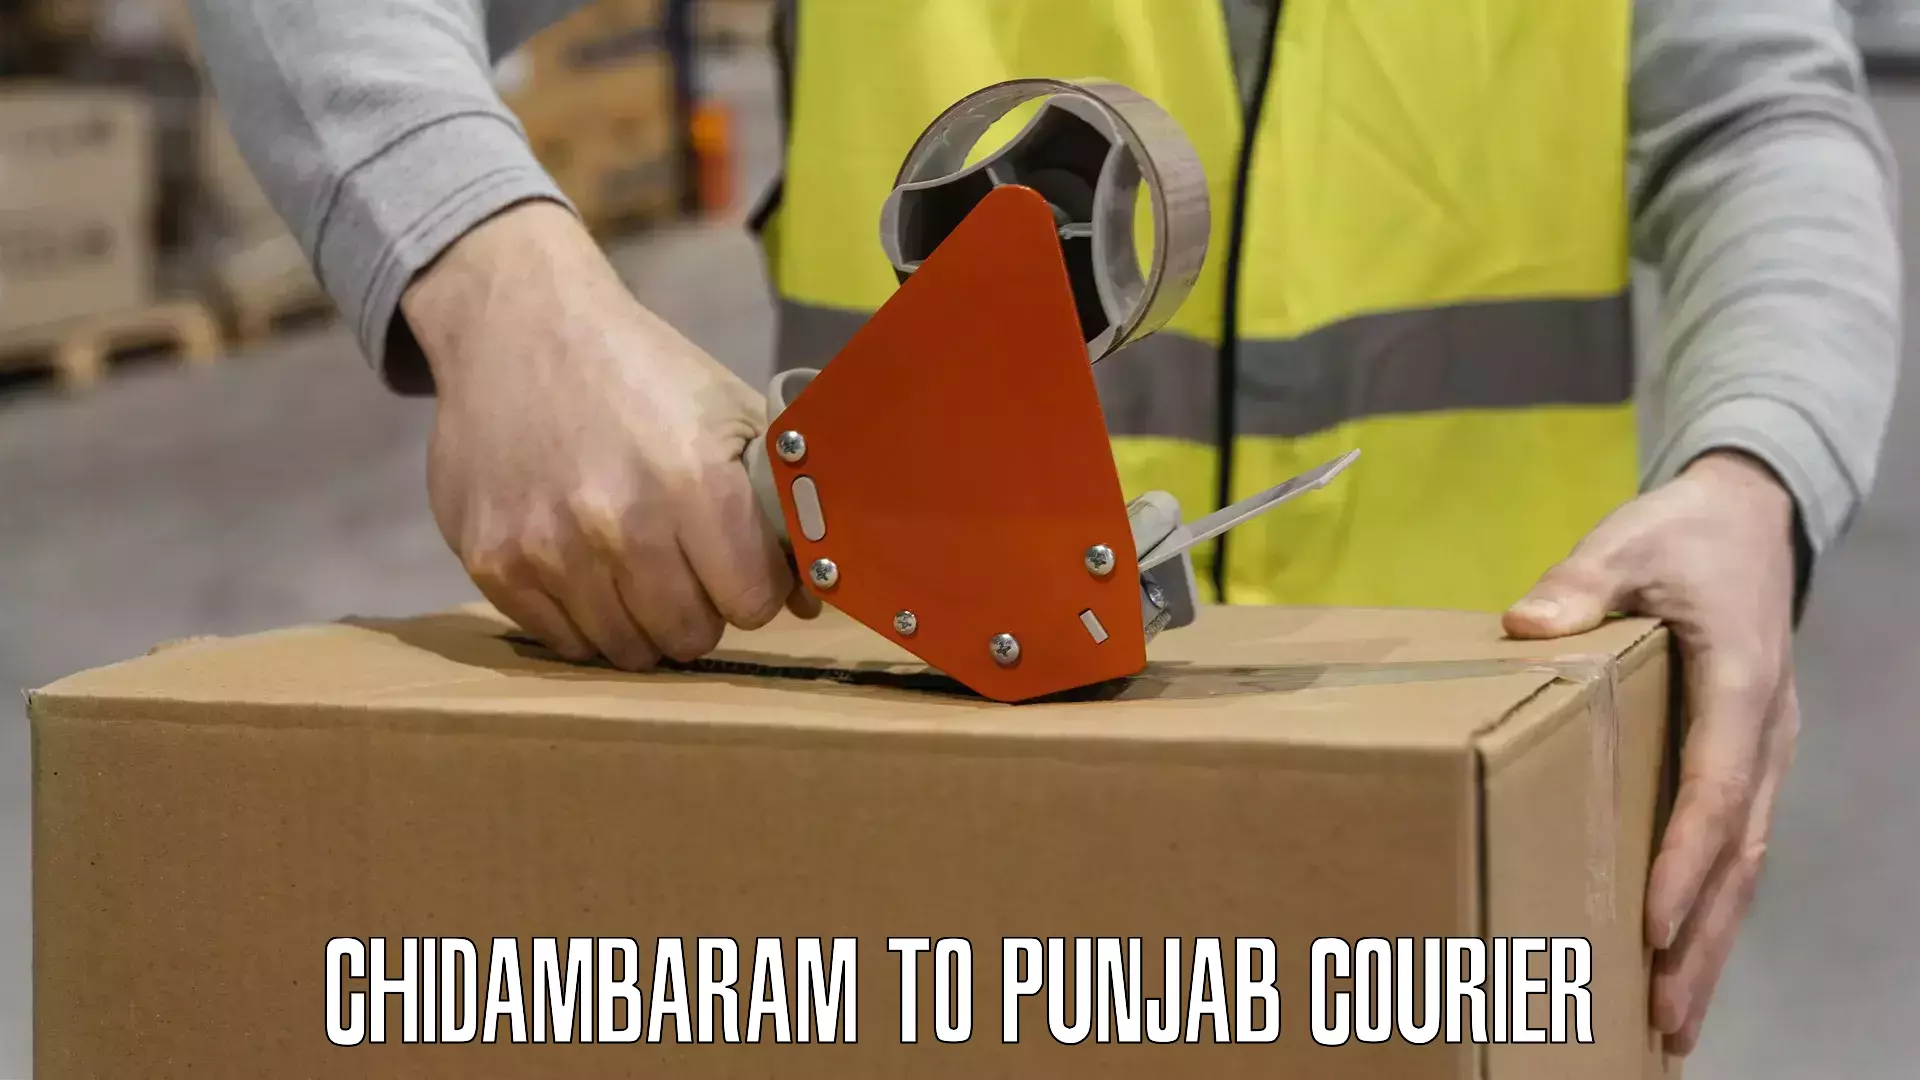 Express courier capabilities Chidambaram to Punjab